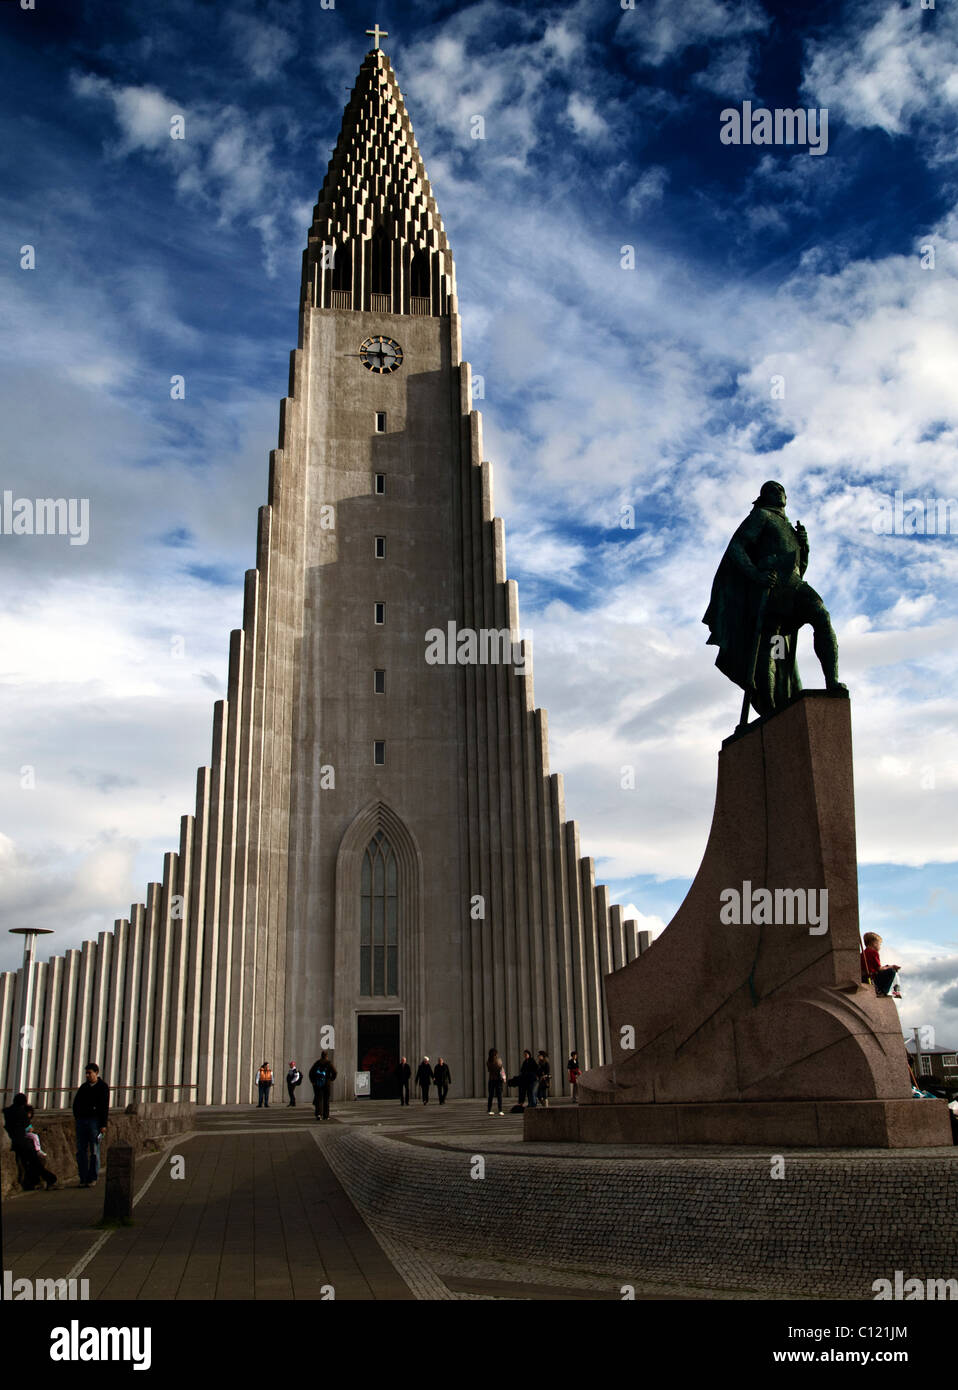 Statue of explorer Leif Ericson in front of the Hallgrímskirkja (Icelandic: 'church of Hallgrímur'), Reykjavik, Iceland Stock Photo